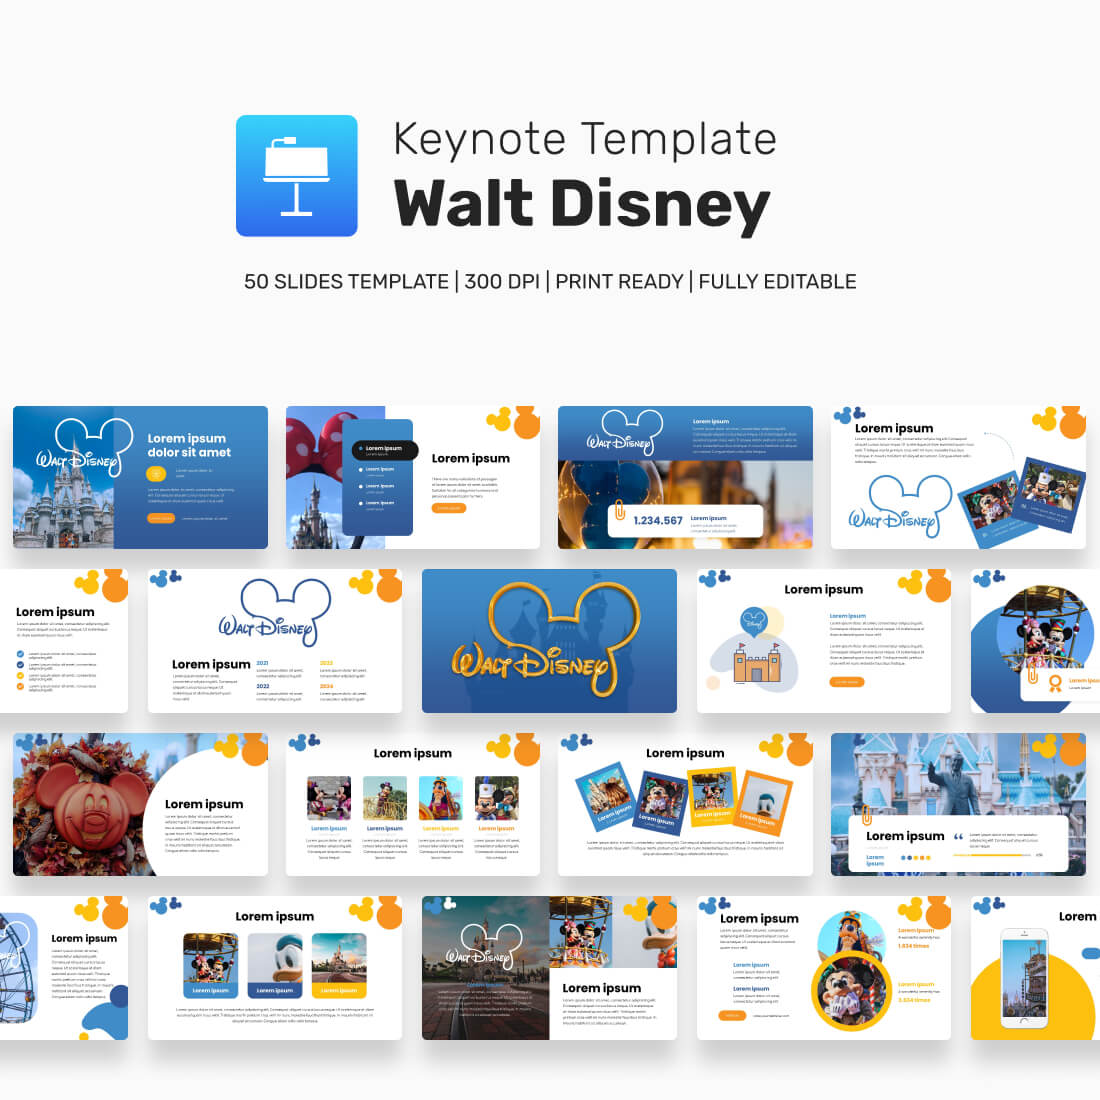 Walt Disney Keynote Template cover image.